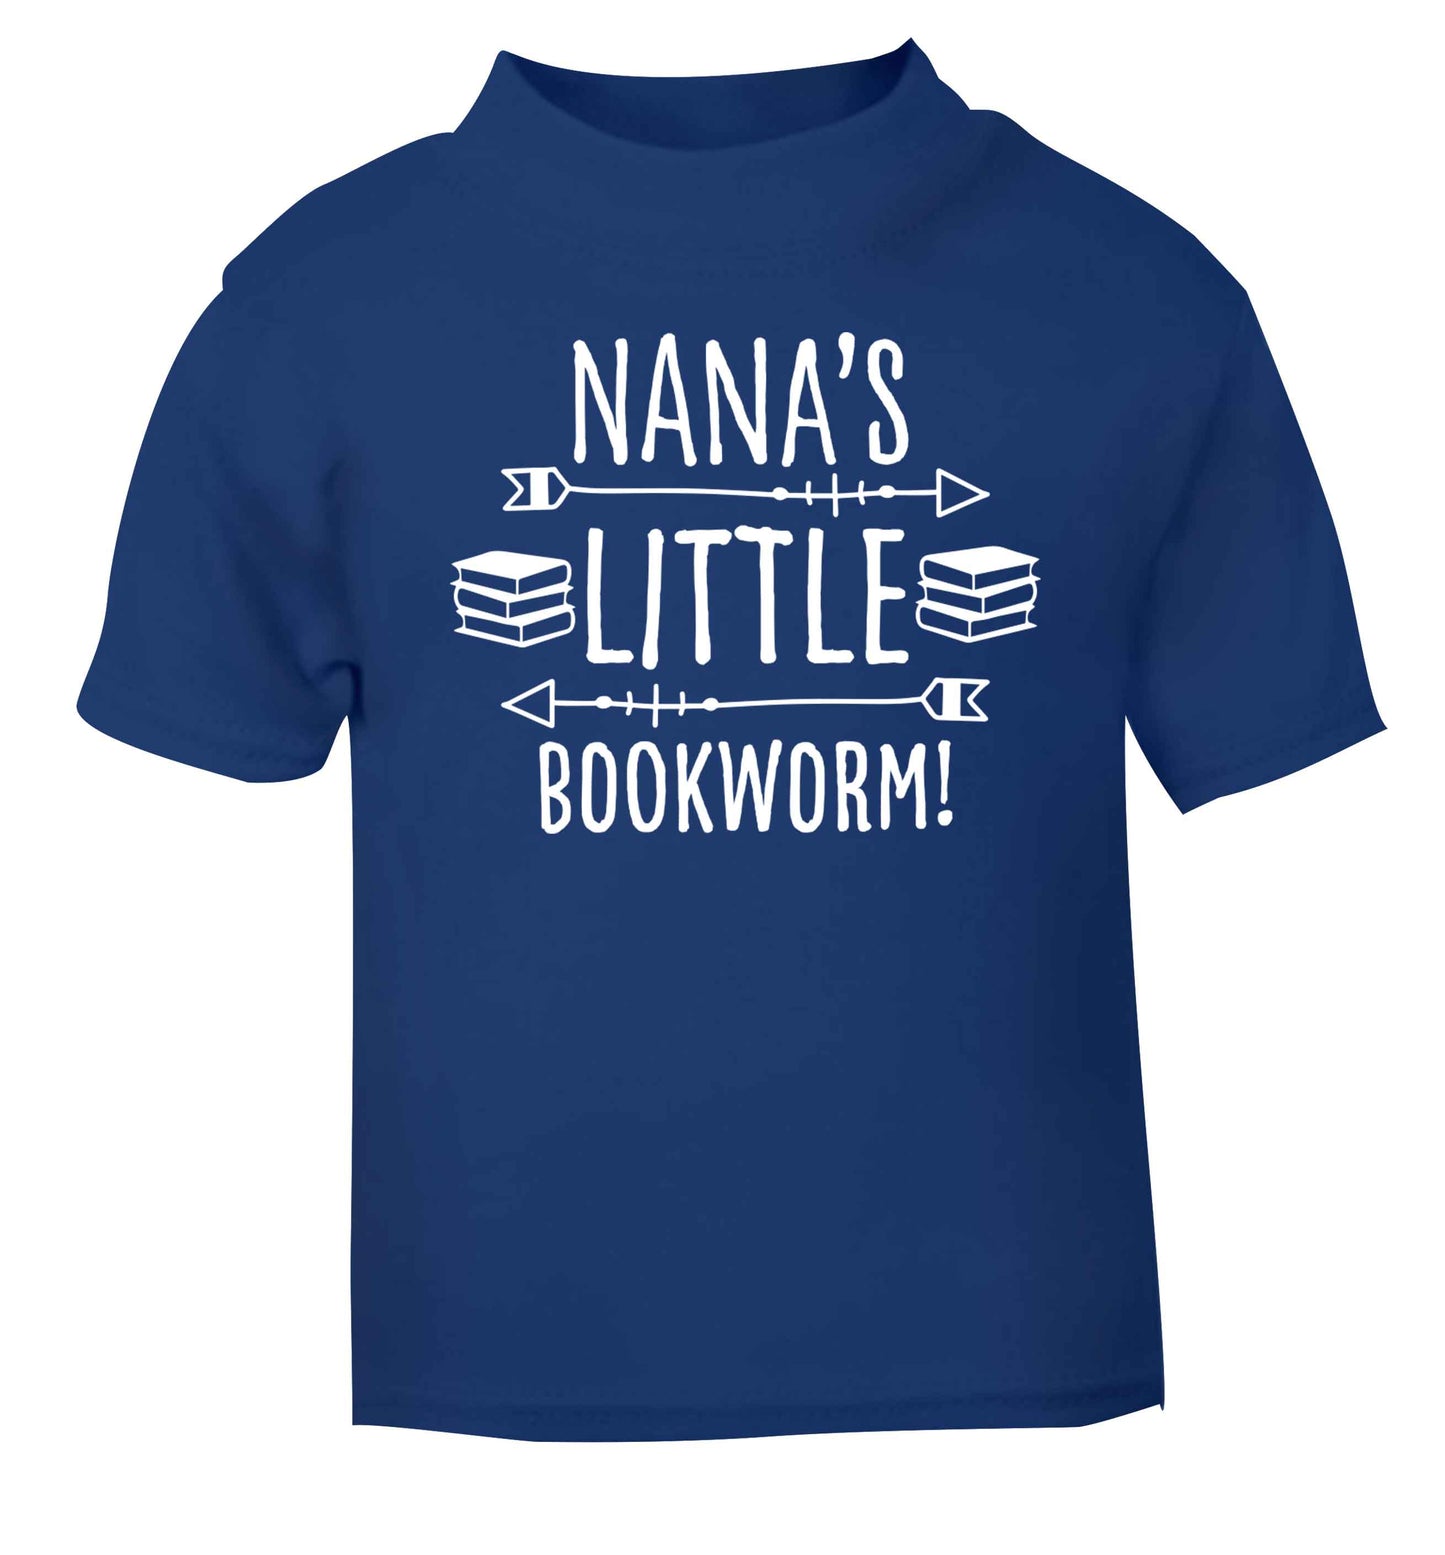 Nana's little bookworm blue baby toddler Tshirt 2 Years